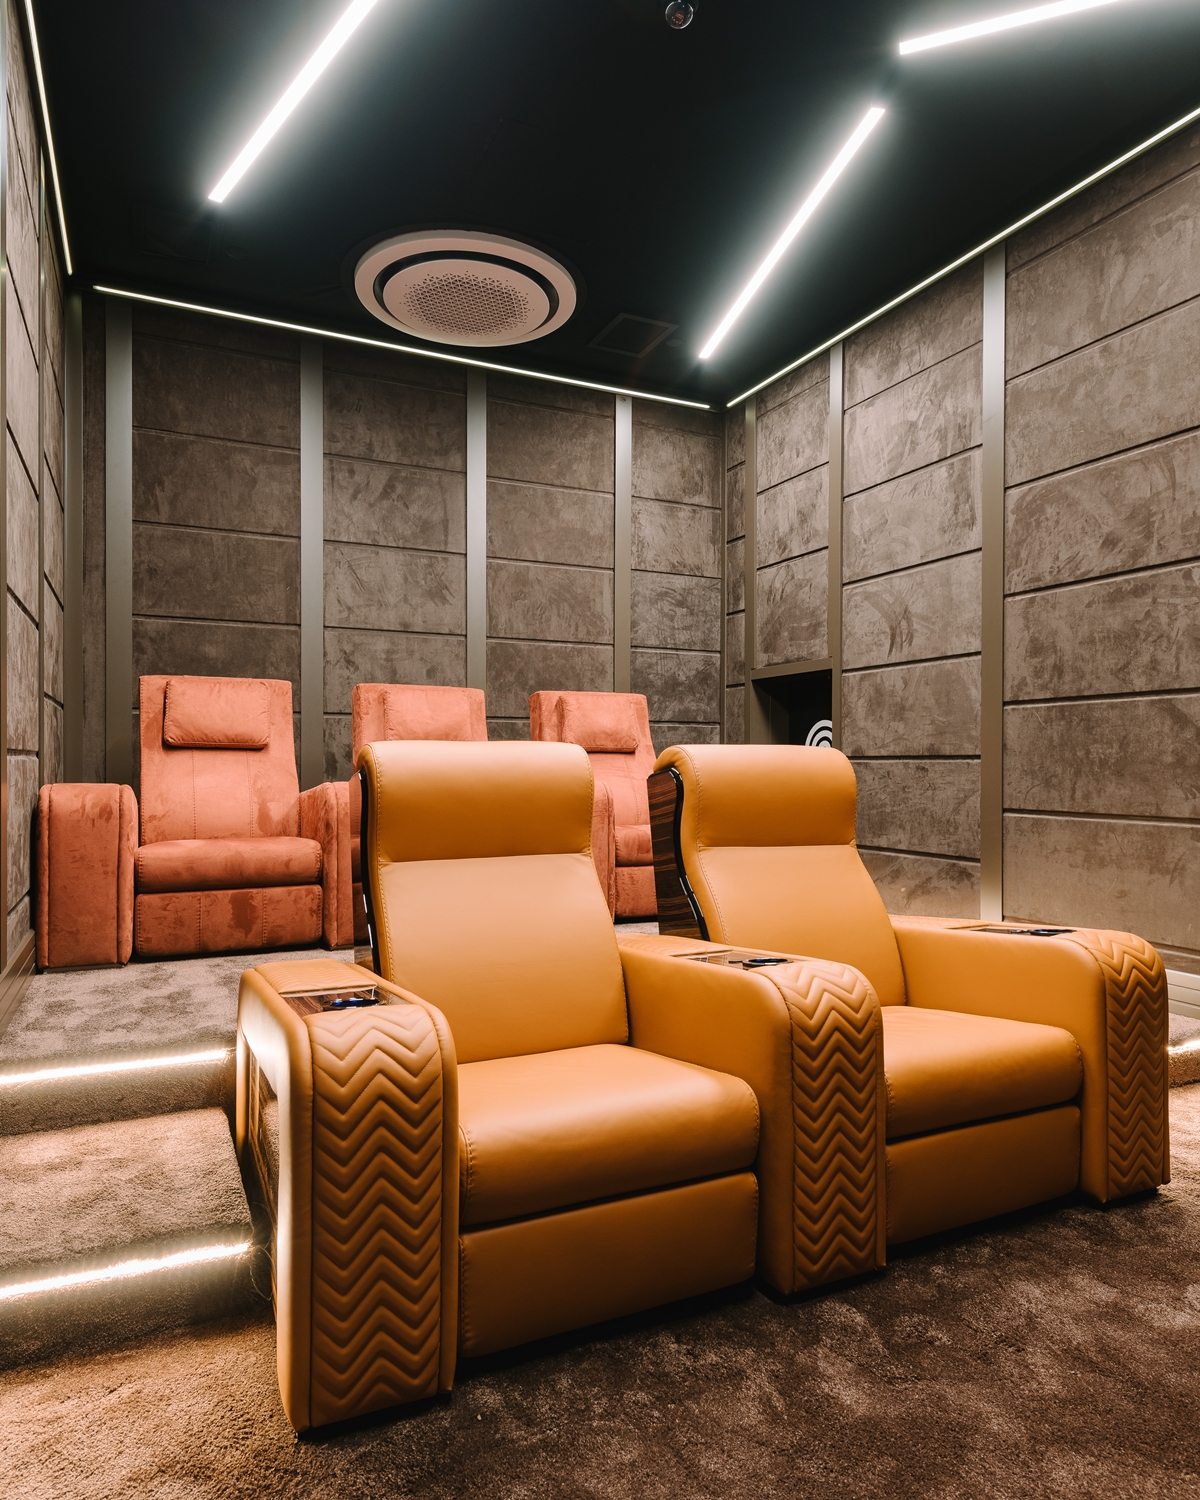 luxury private home cinema made by Vismara and Samsung